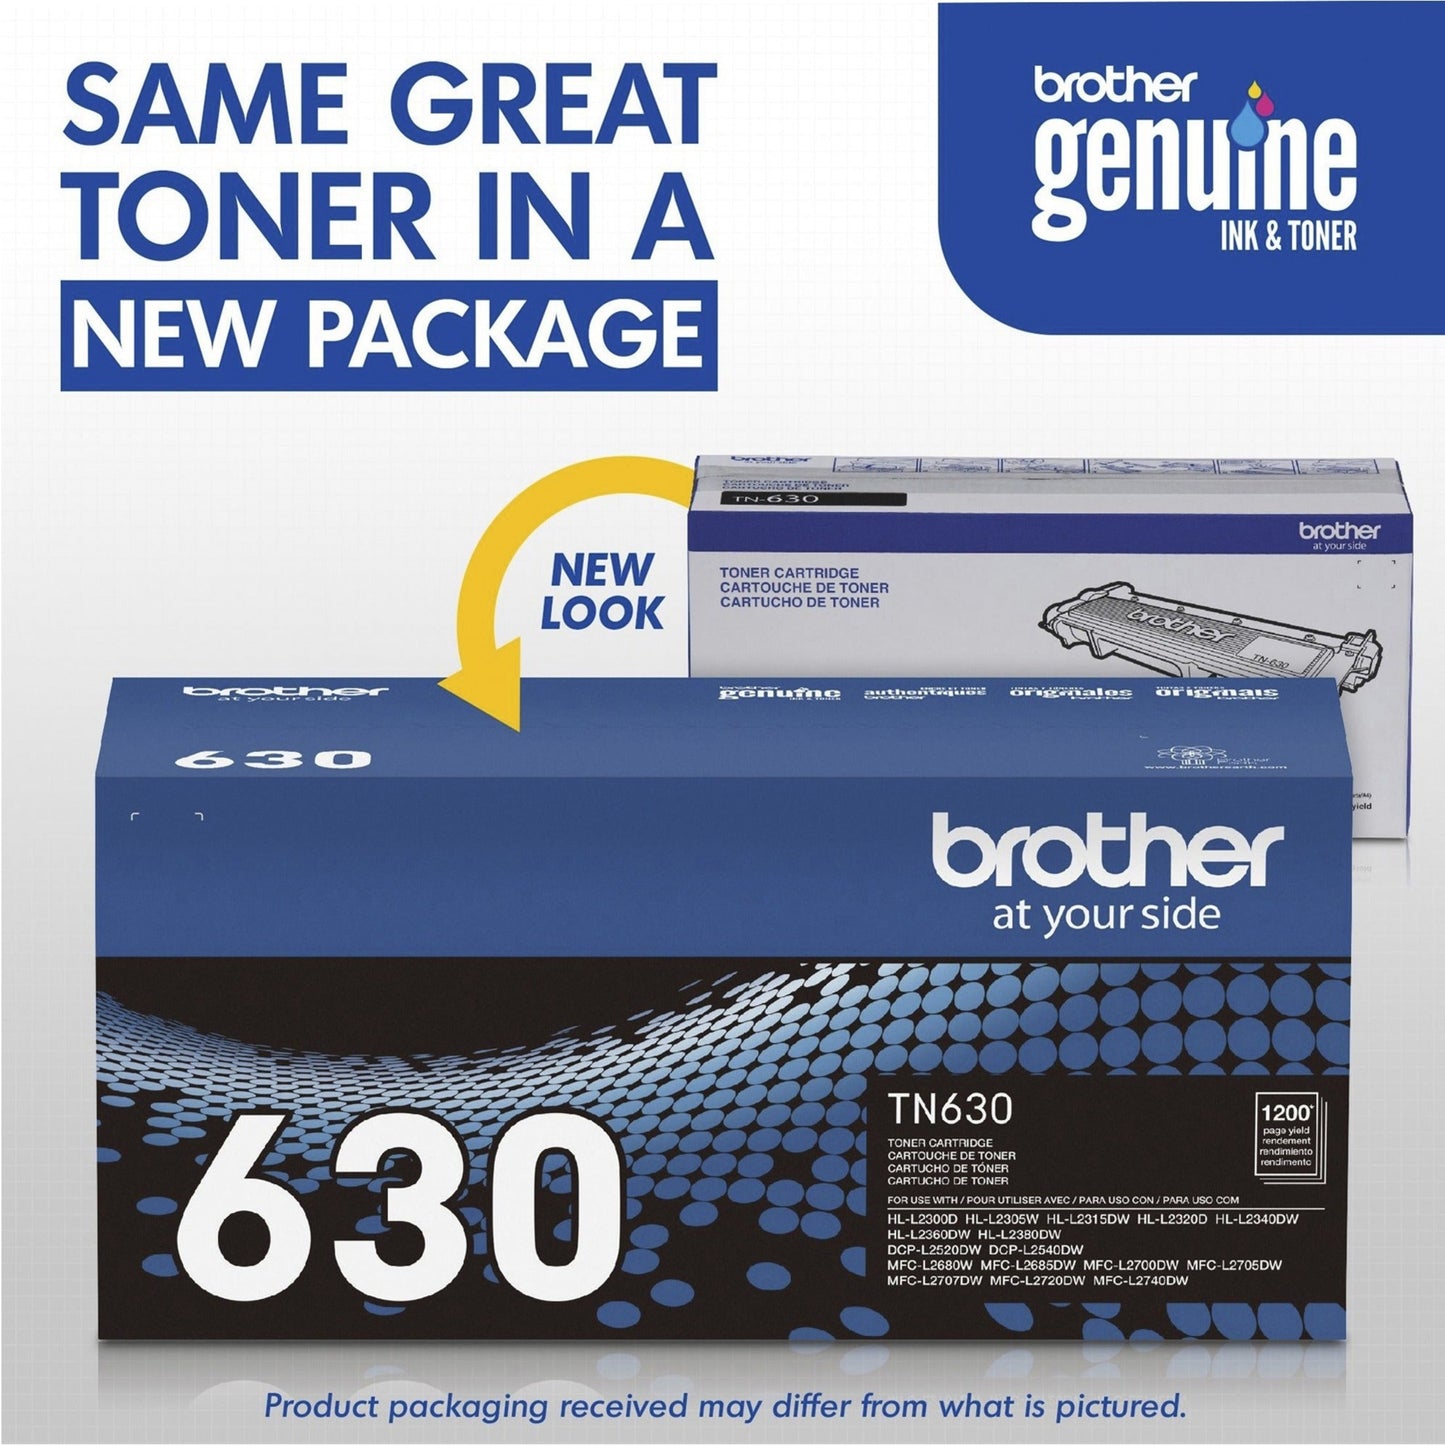 Brother Genuine TN630 Black Toner Cartridge